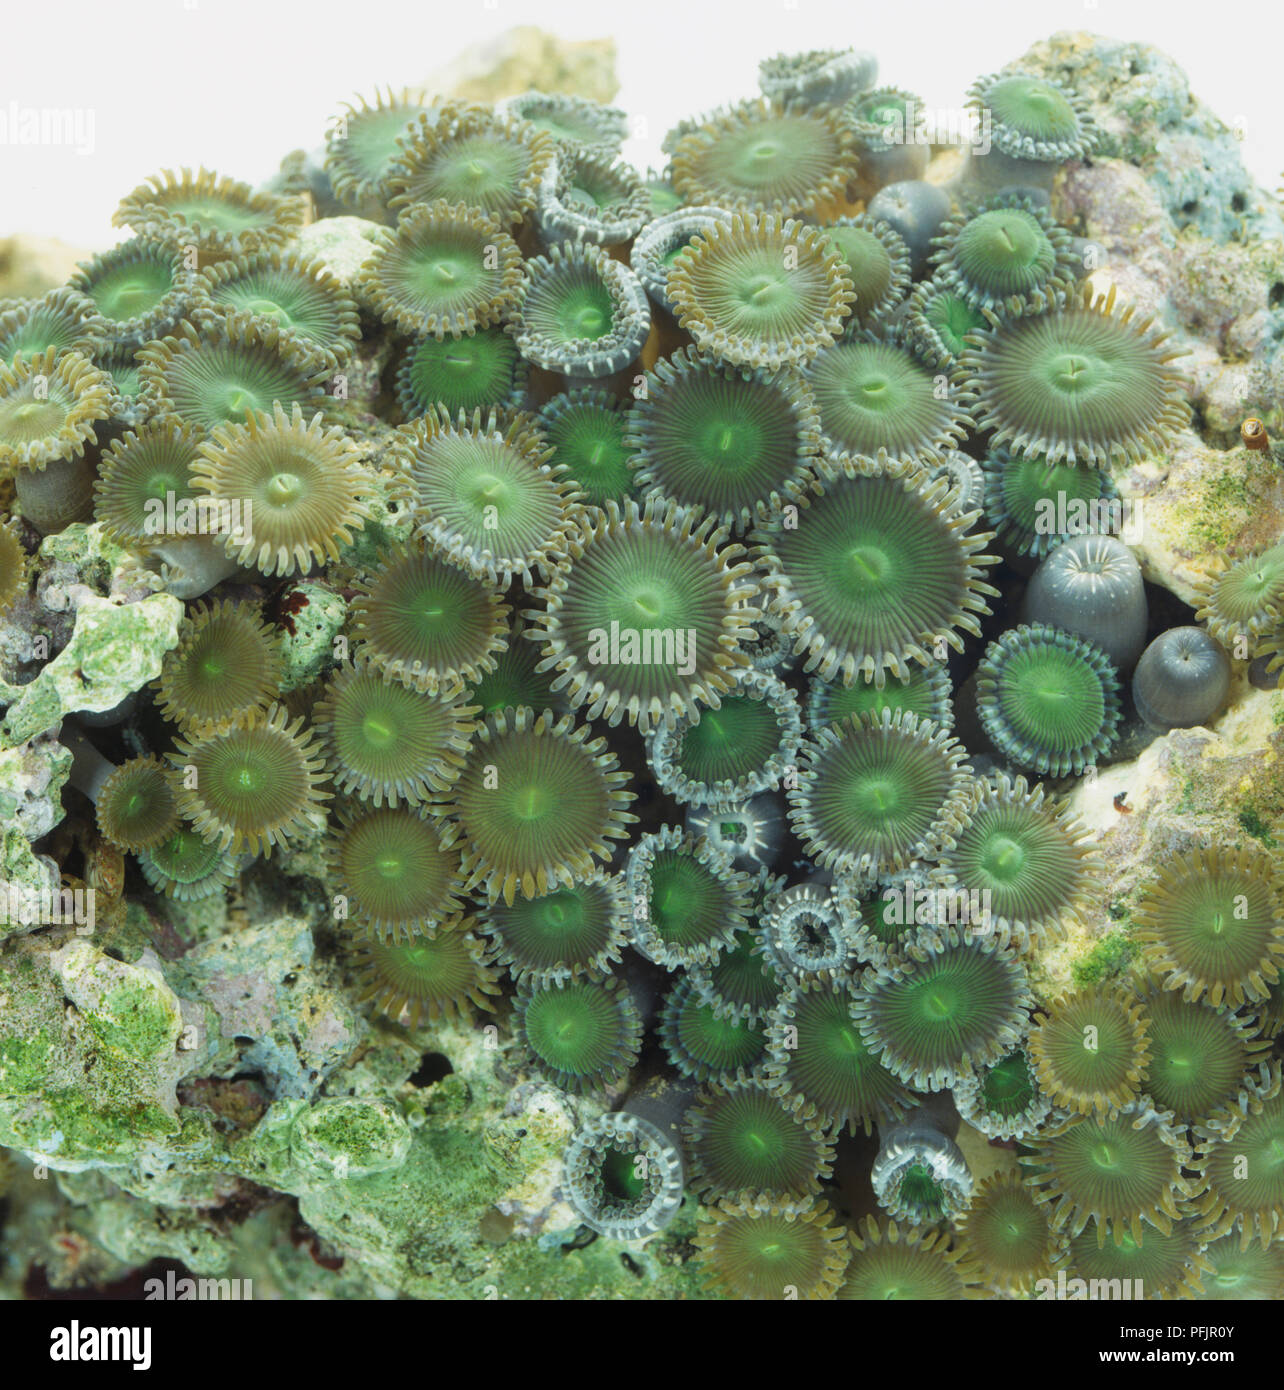 Green Sea Anemones (Actinaria), close up Stock Photo